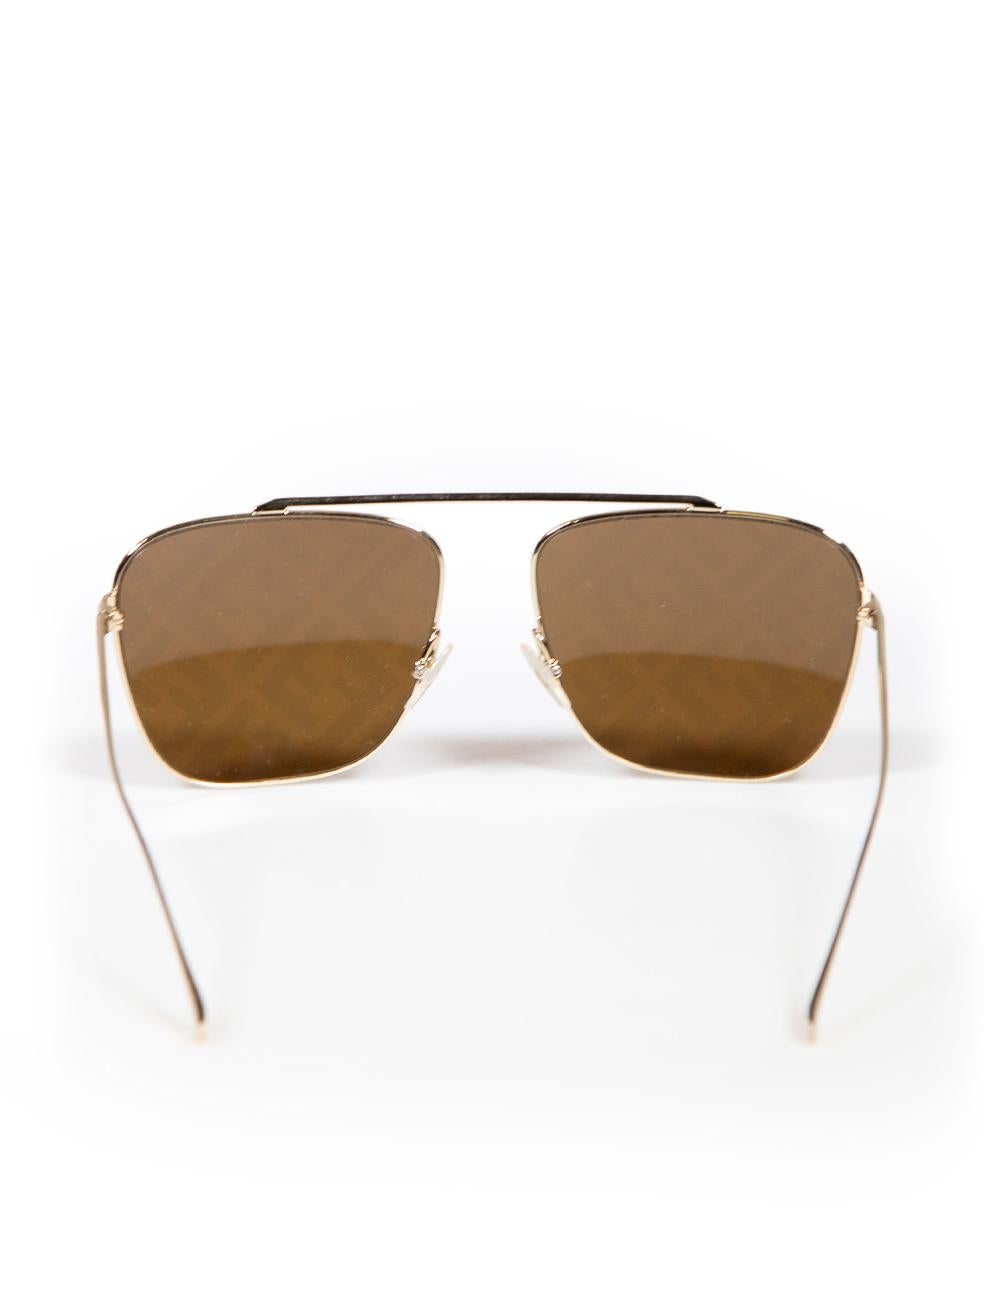 Fendi Brown Metal FF Logo Sunglasses In Good Condition For Sale In London, GB